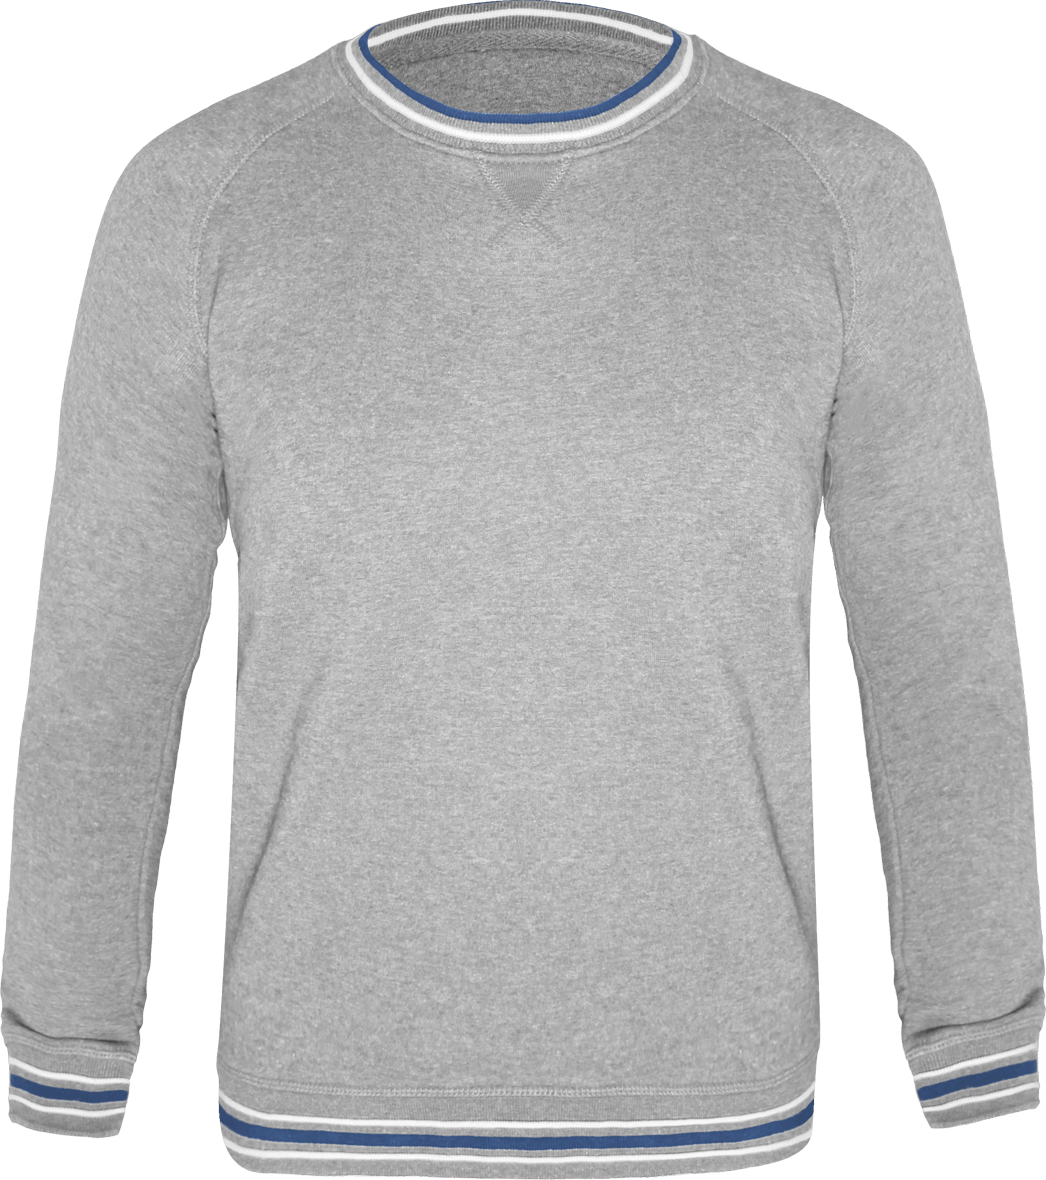 Customizable Stanley Strolls Tipped Men's Sweatshirt French Navy / White / Heather Grey